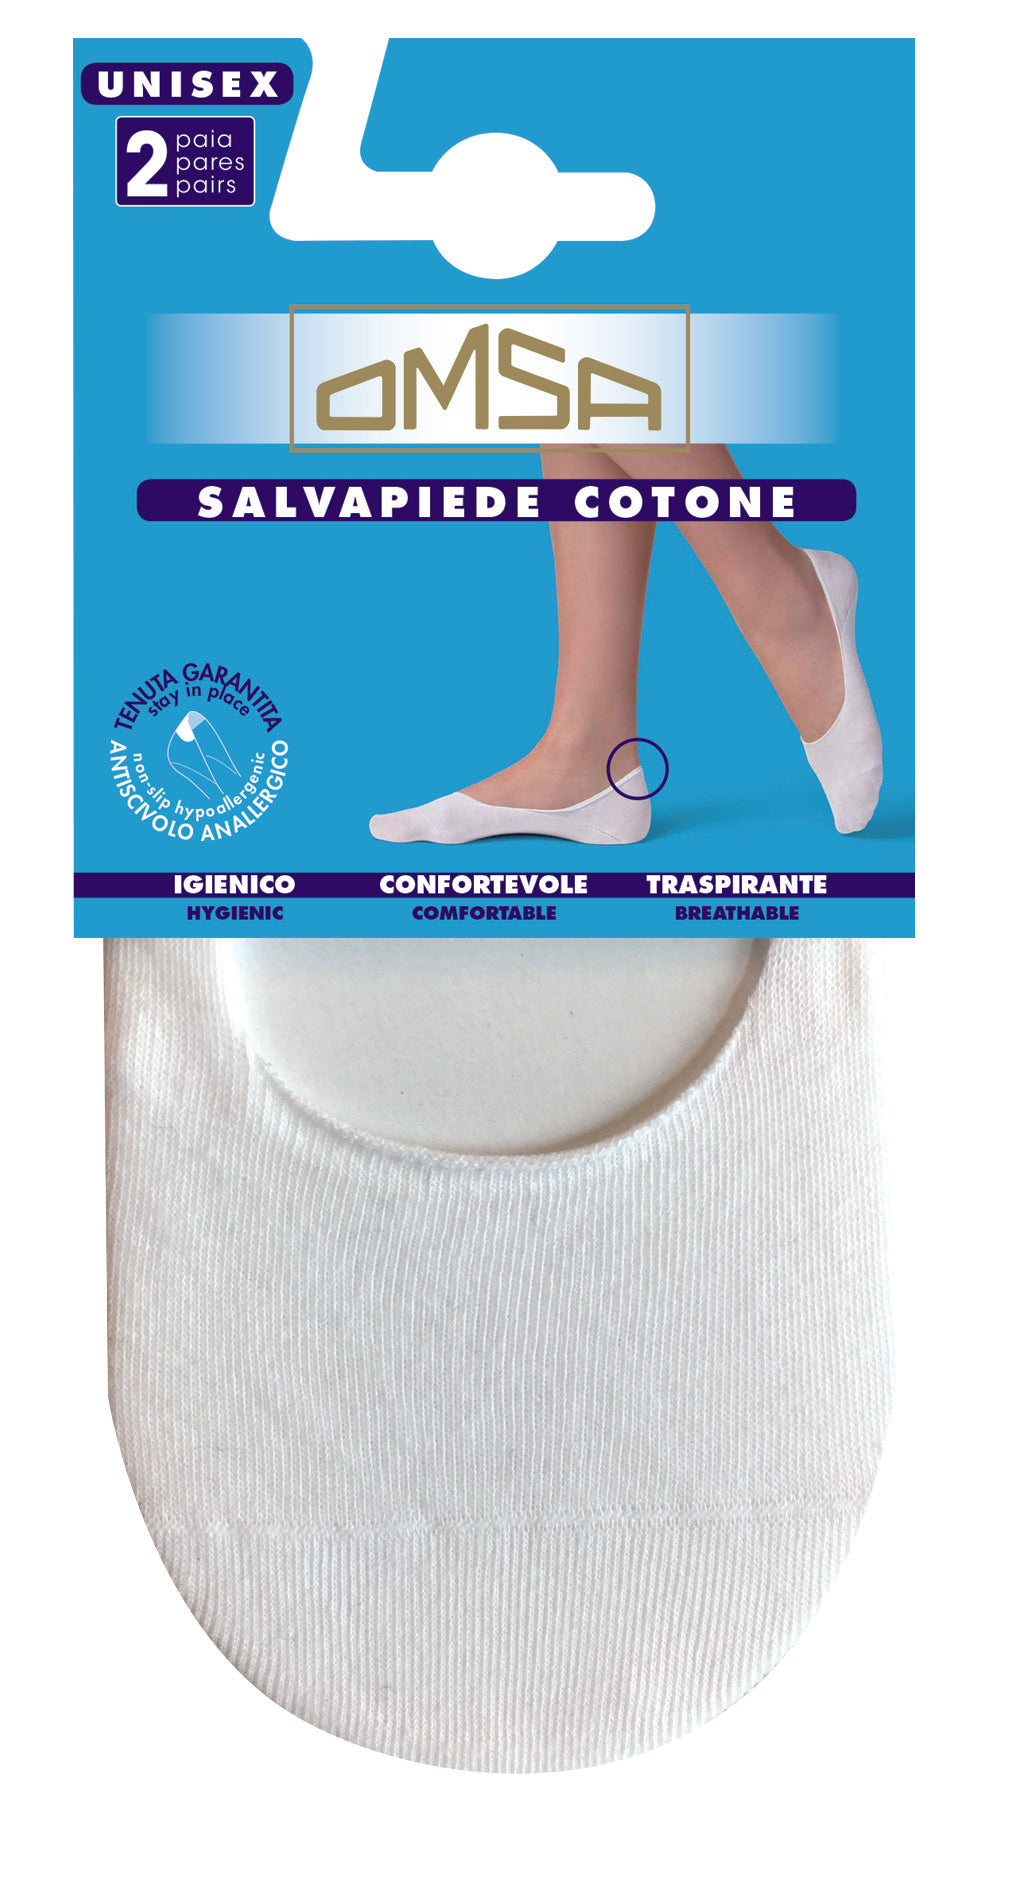 Omsa Salvapiede Cotone - cotton no show shoe liner socks, perfect for that no sock look